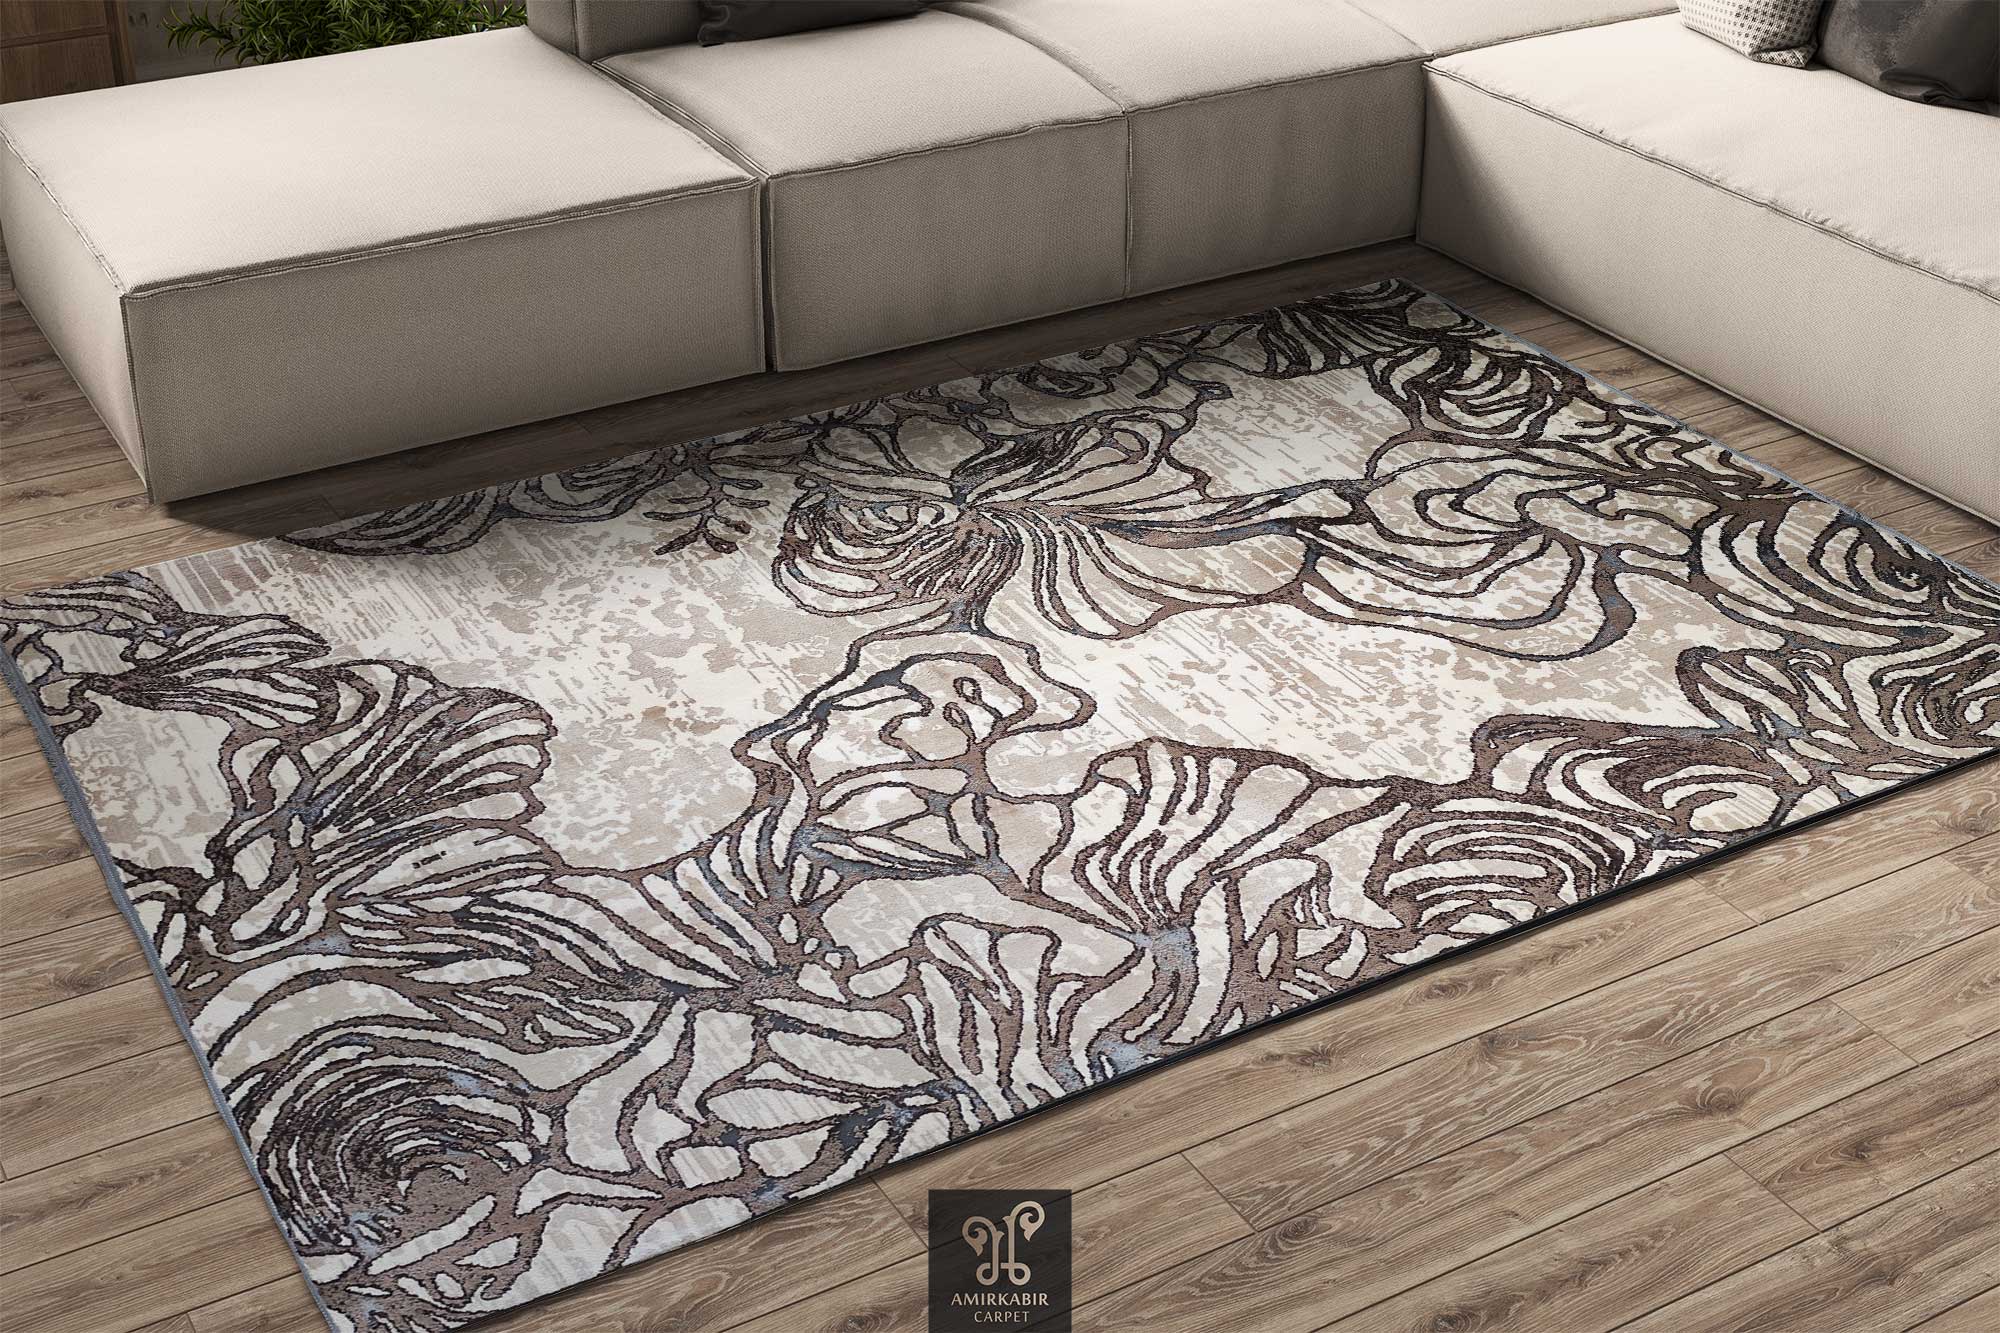 Vintage 400 reeds carpet -1400 Density RUG - Modern Carpet - Harmony Carpet 11117